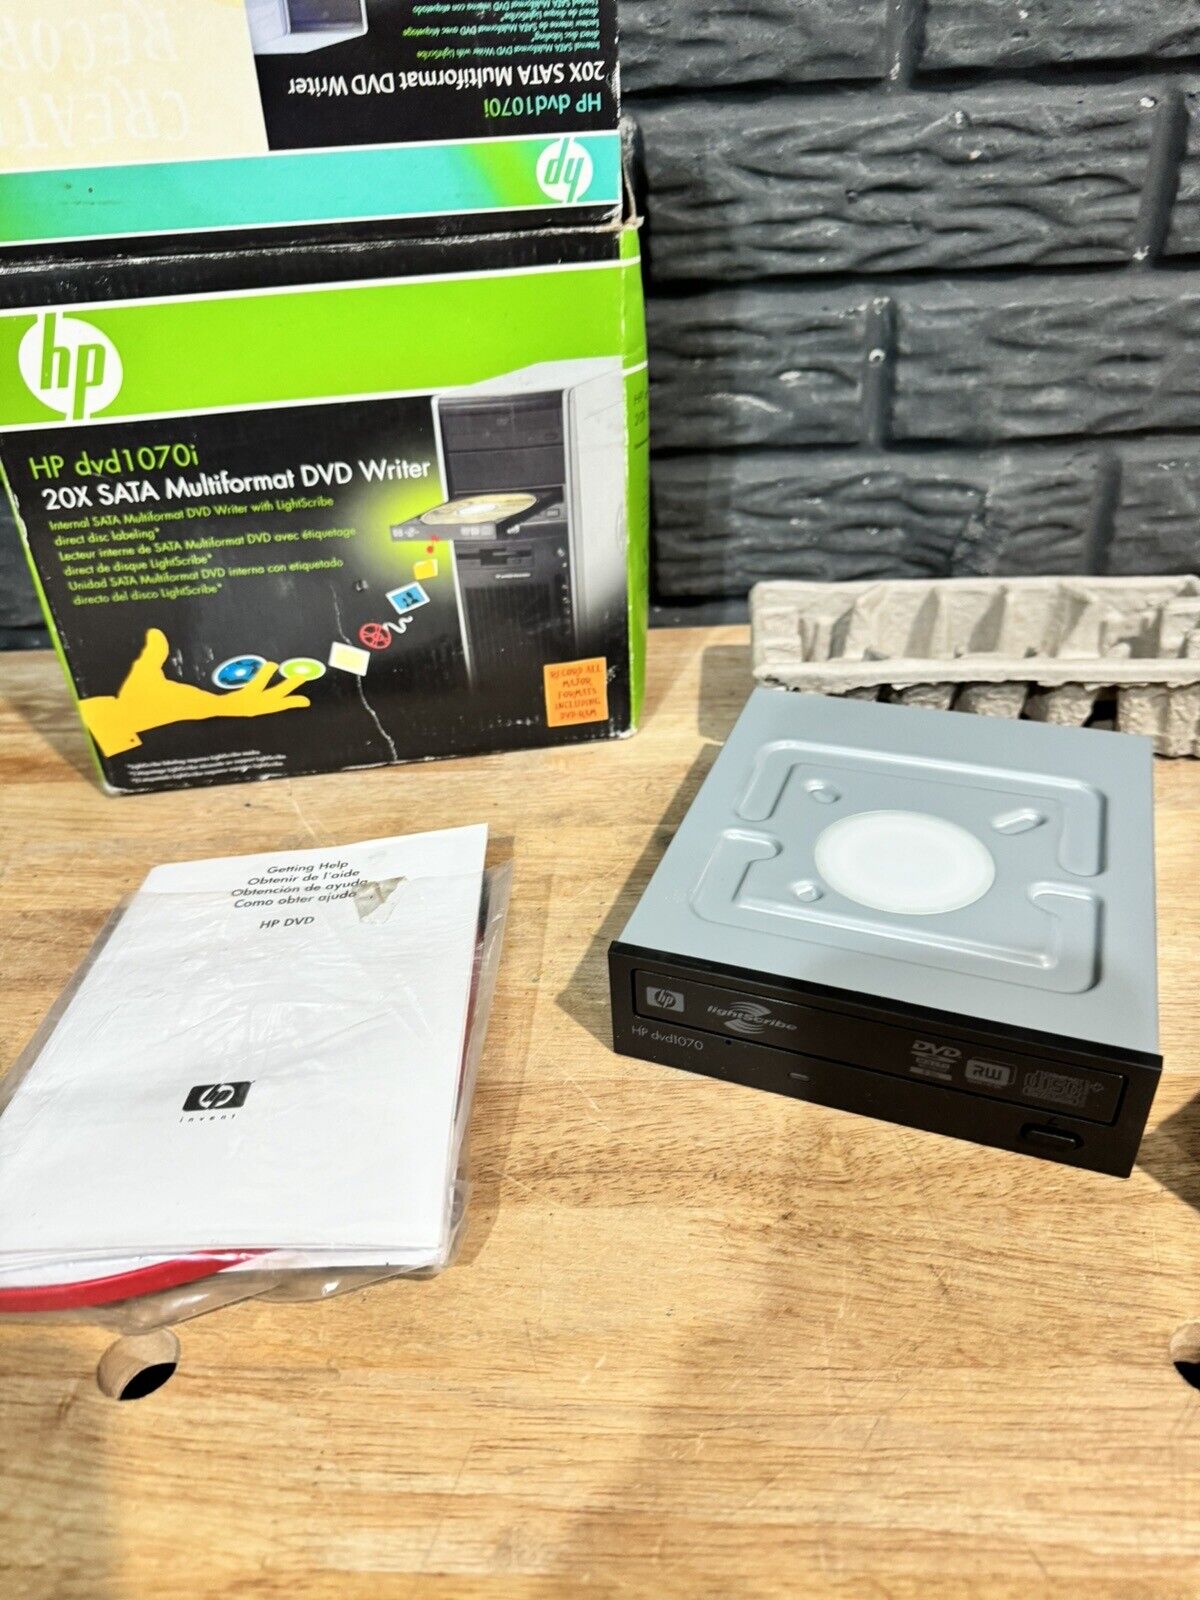 HP DVD1070i 20X SATA Multiformat DVD Writer New Hewlett Packard DVD-R DVDRW CDR